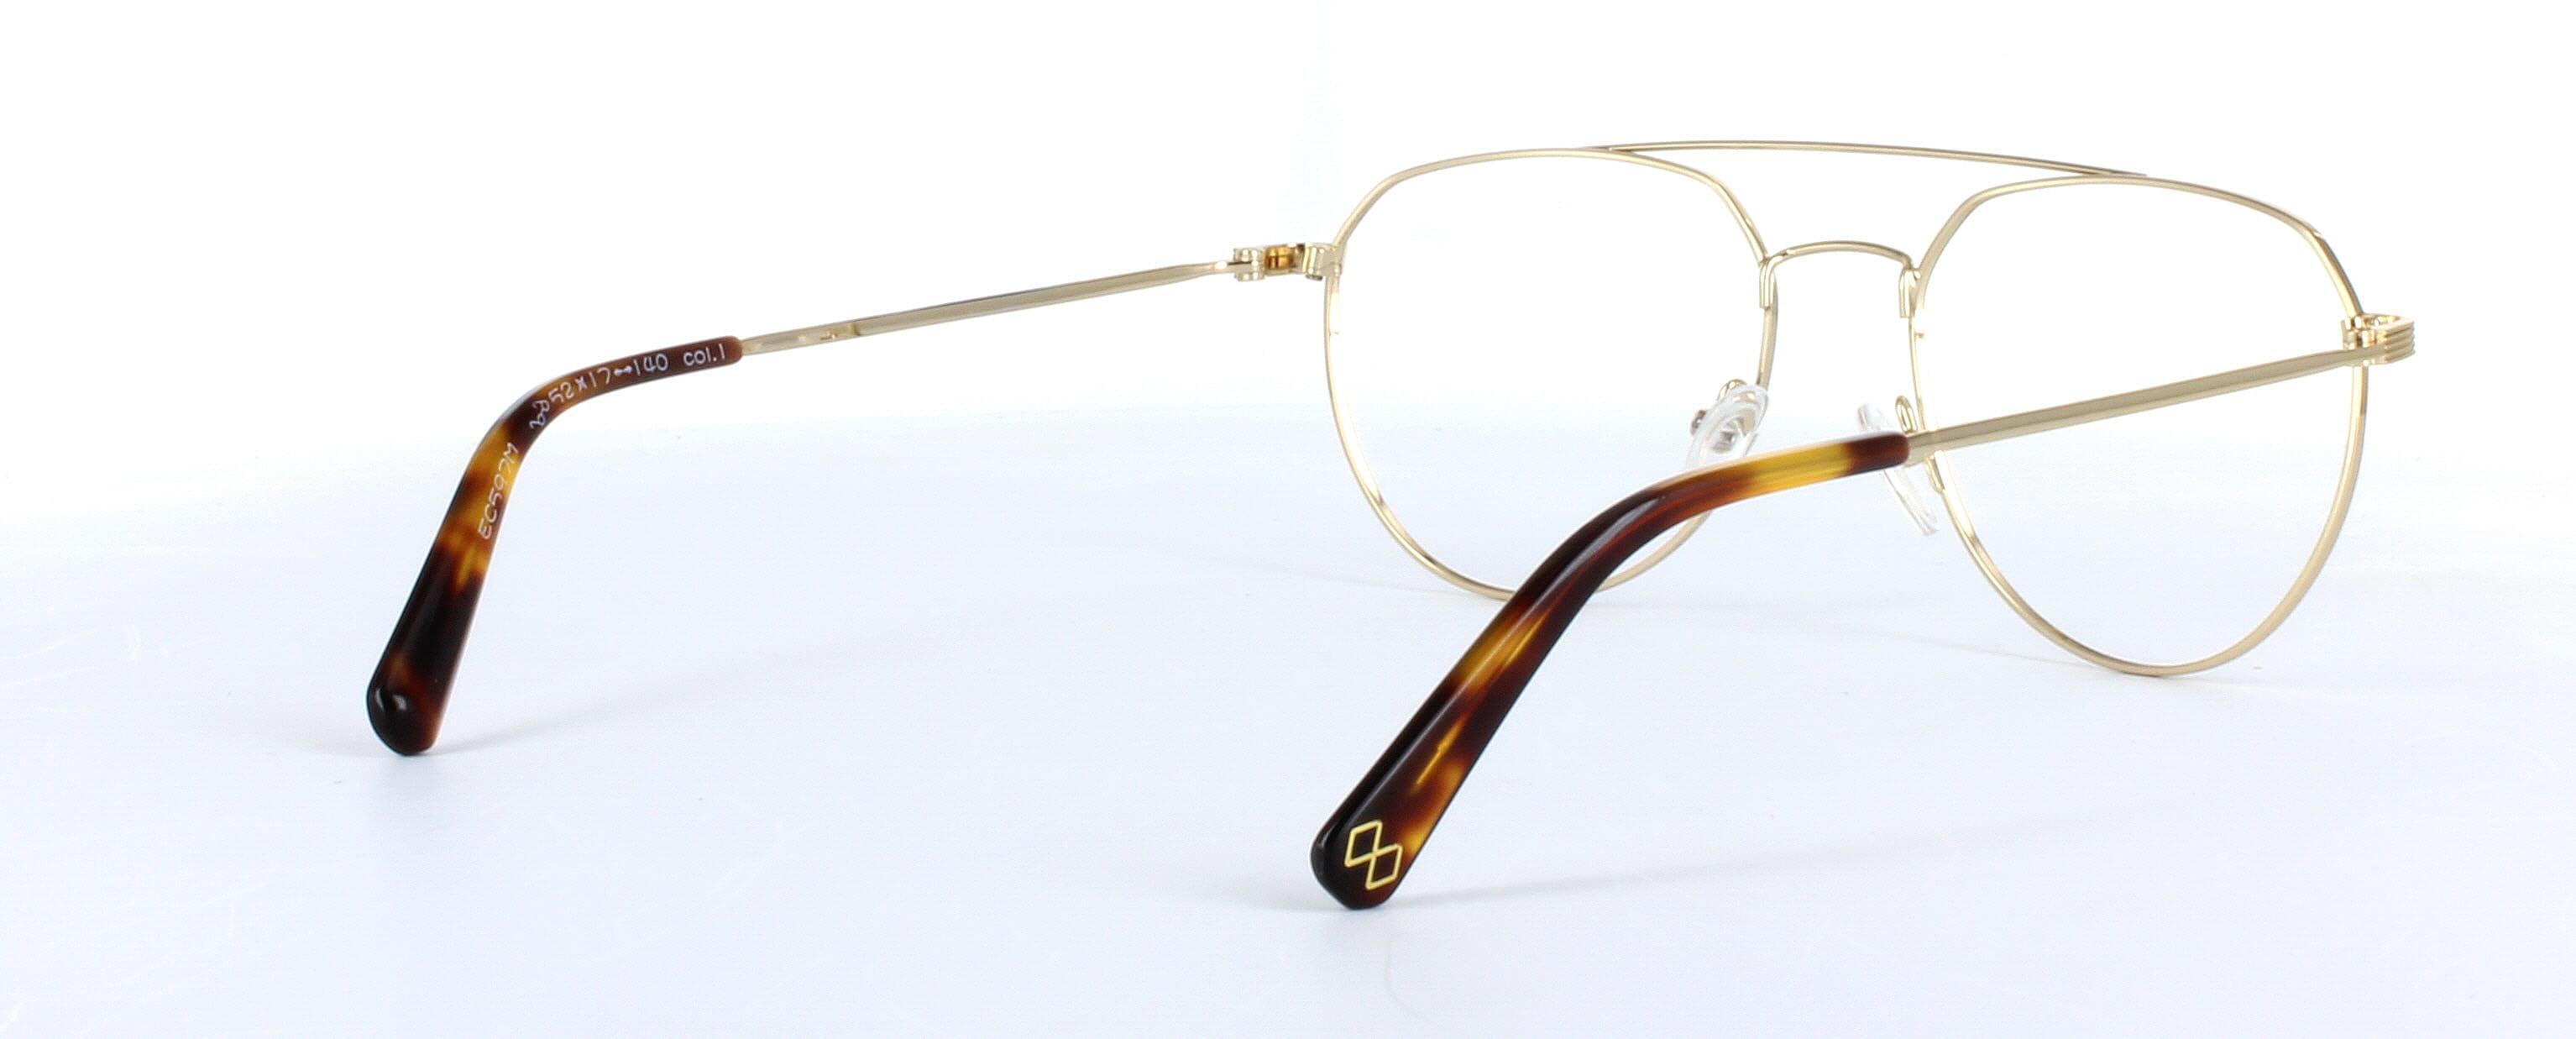 Eyecroxx 597 Black and Gold Full Rim Aviator Metal Glasses - Image View 4